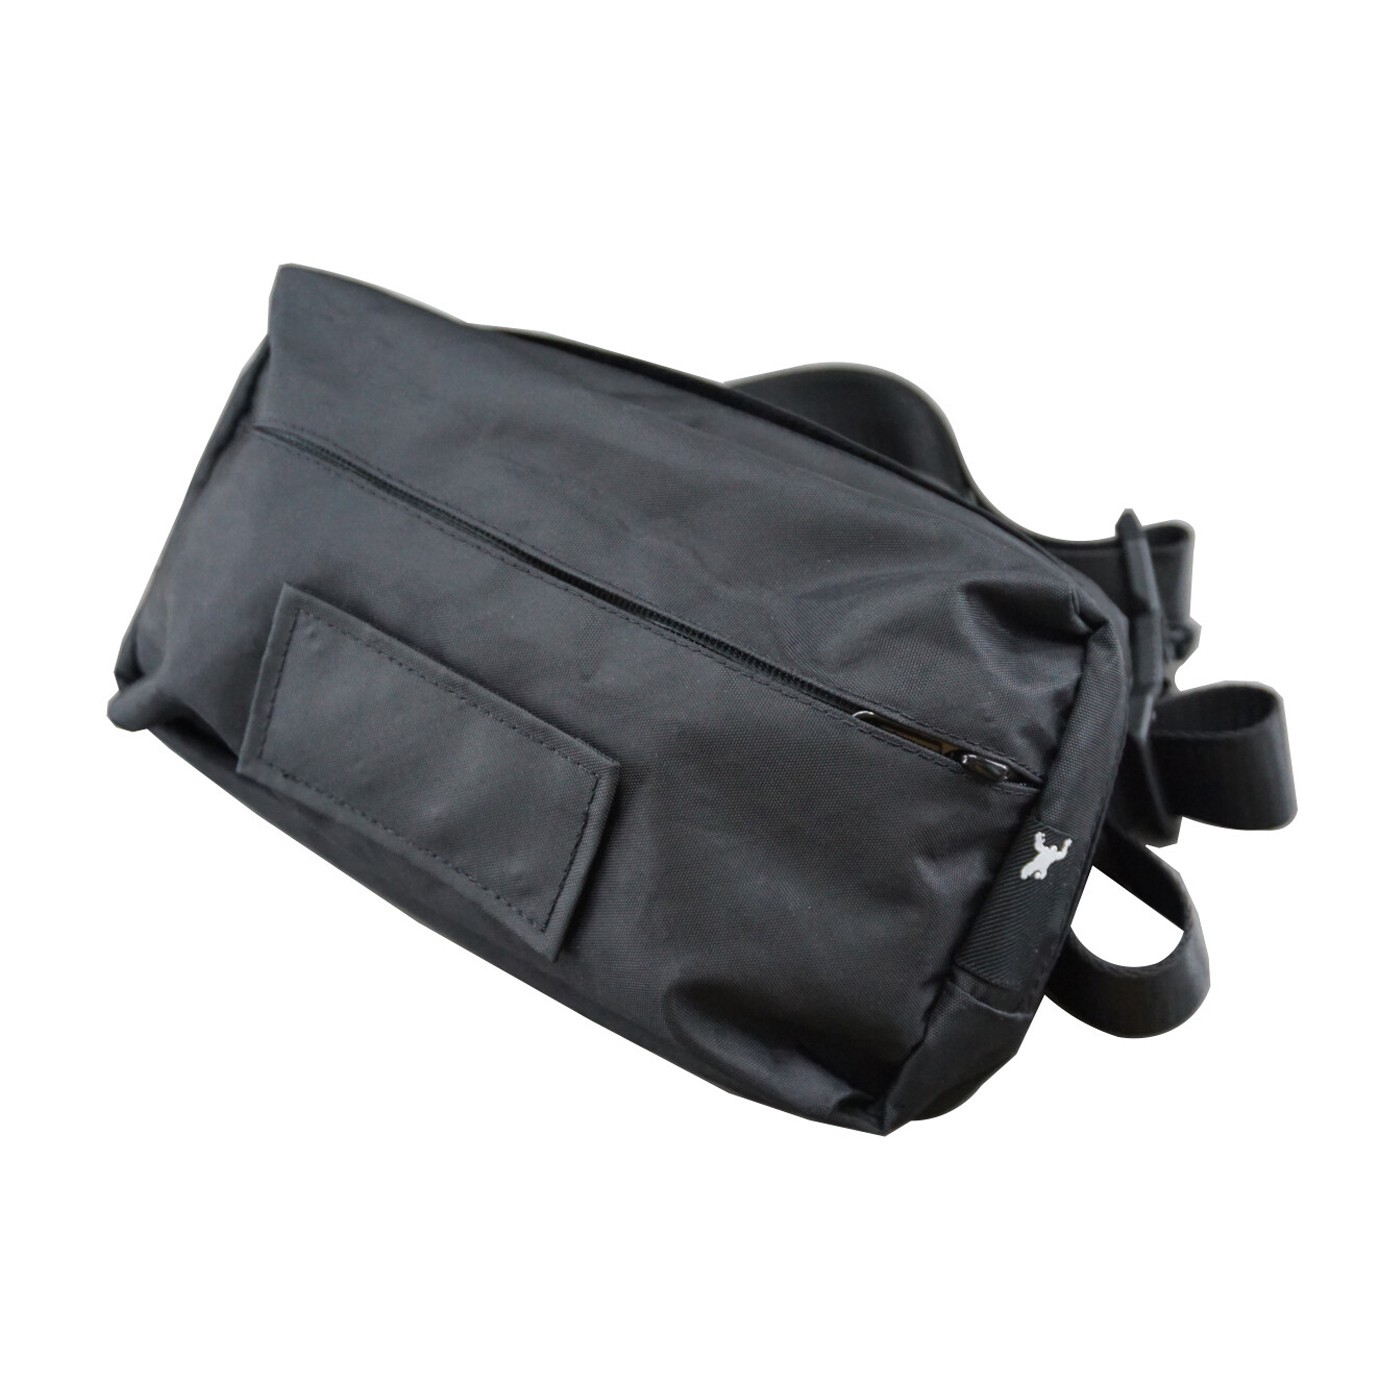 Buy Sling//007 Dark Green Sling Bag Online – Urban Monkey®